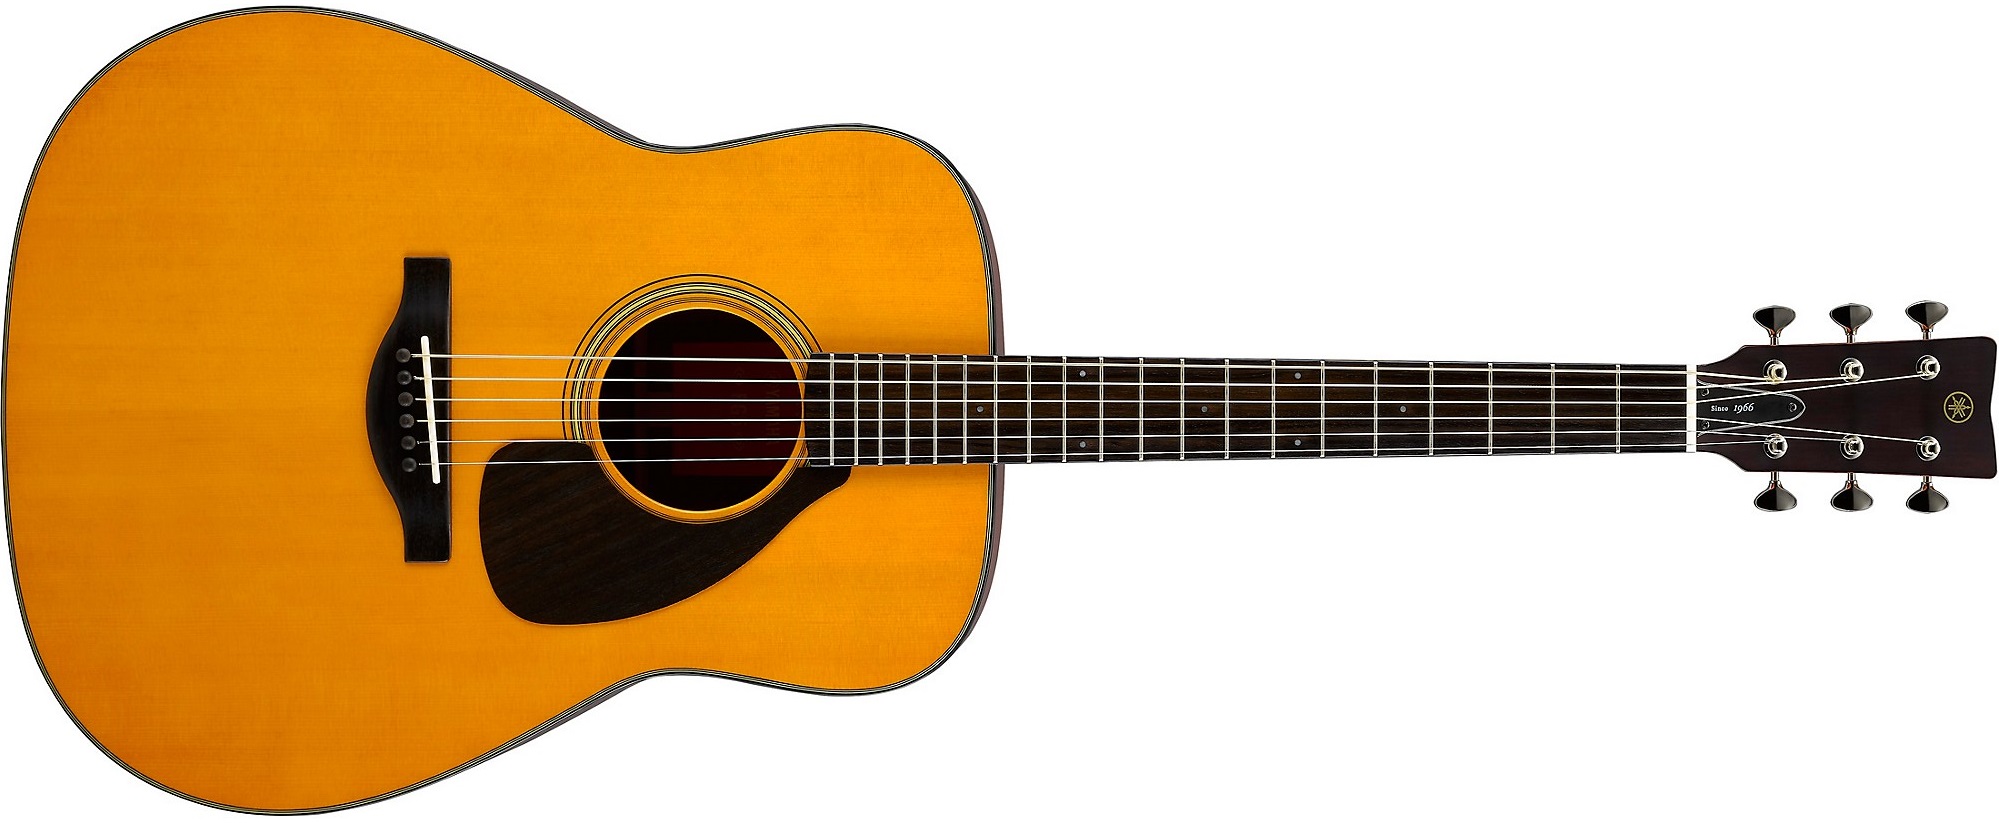 Yamaha FG5 Acoustic Guitar on a white background